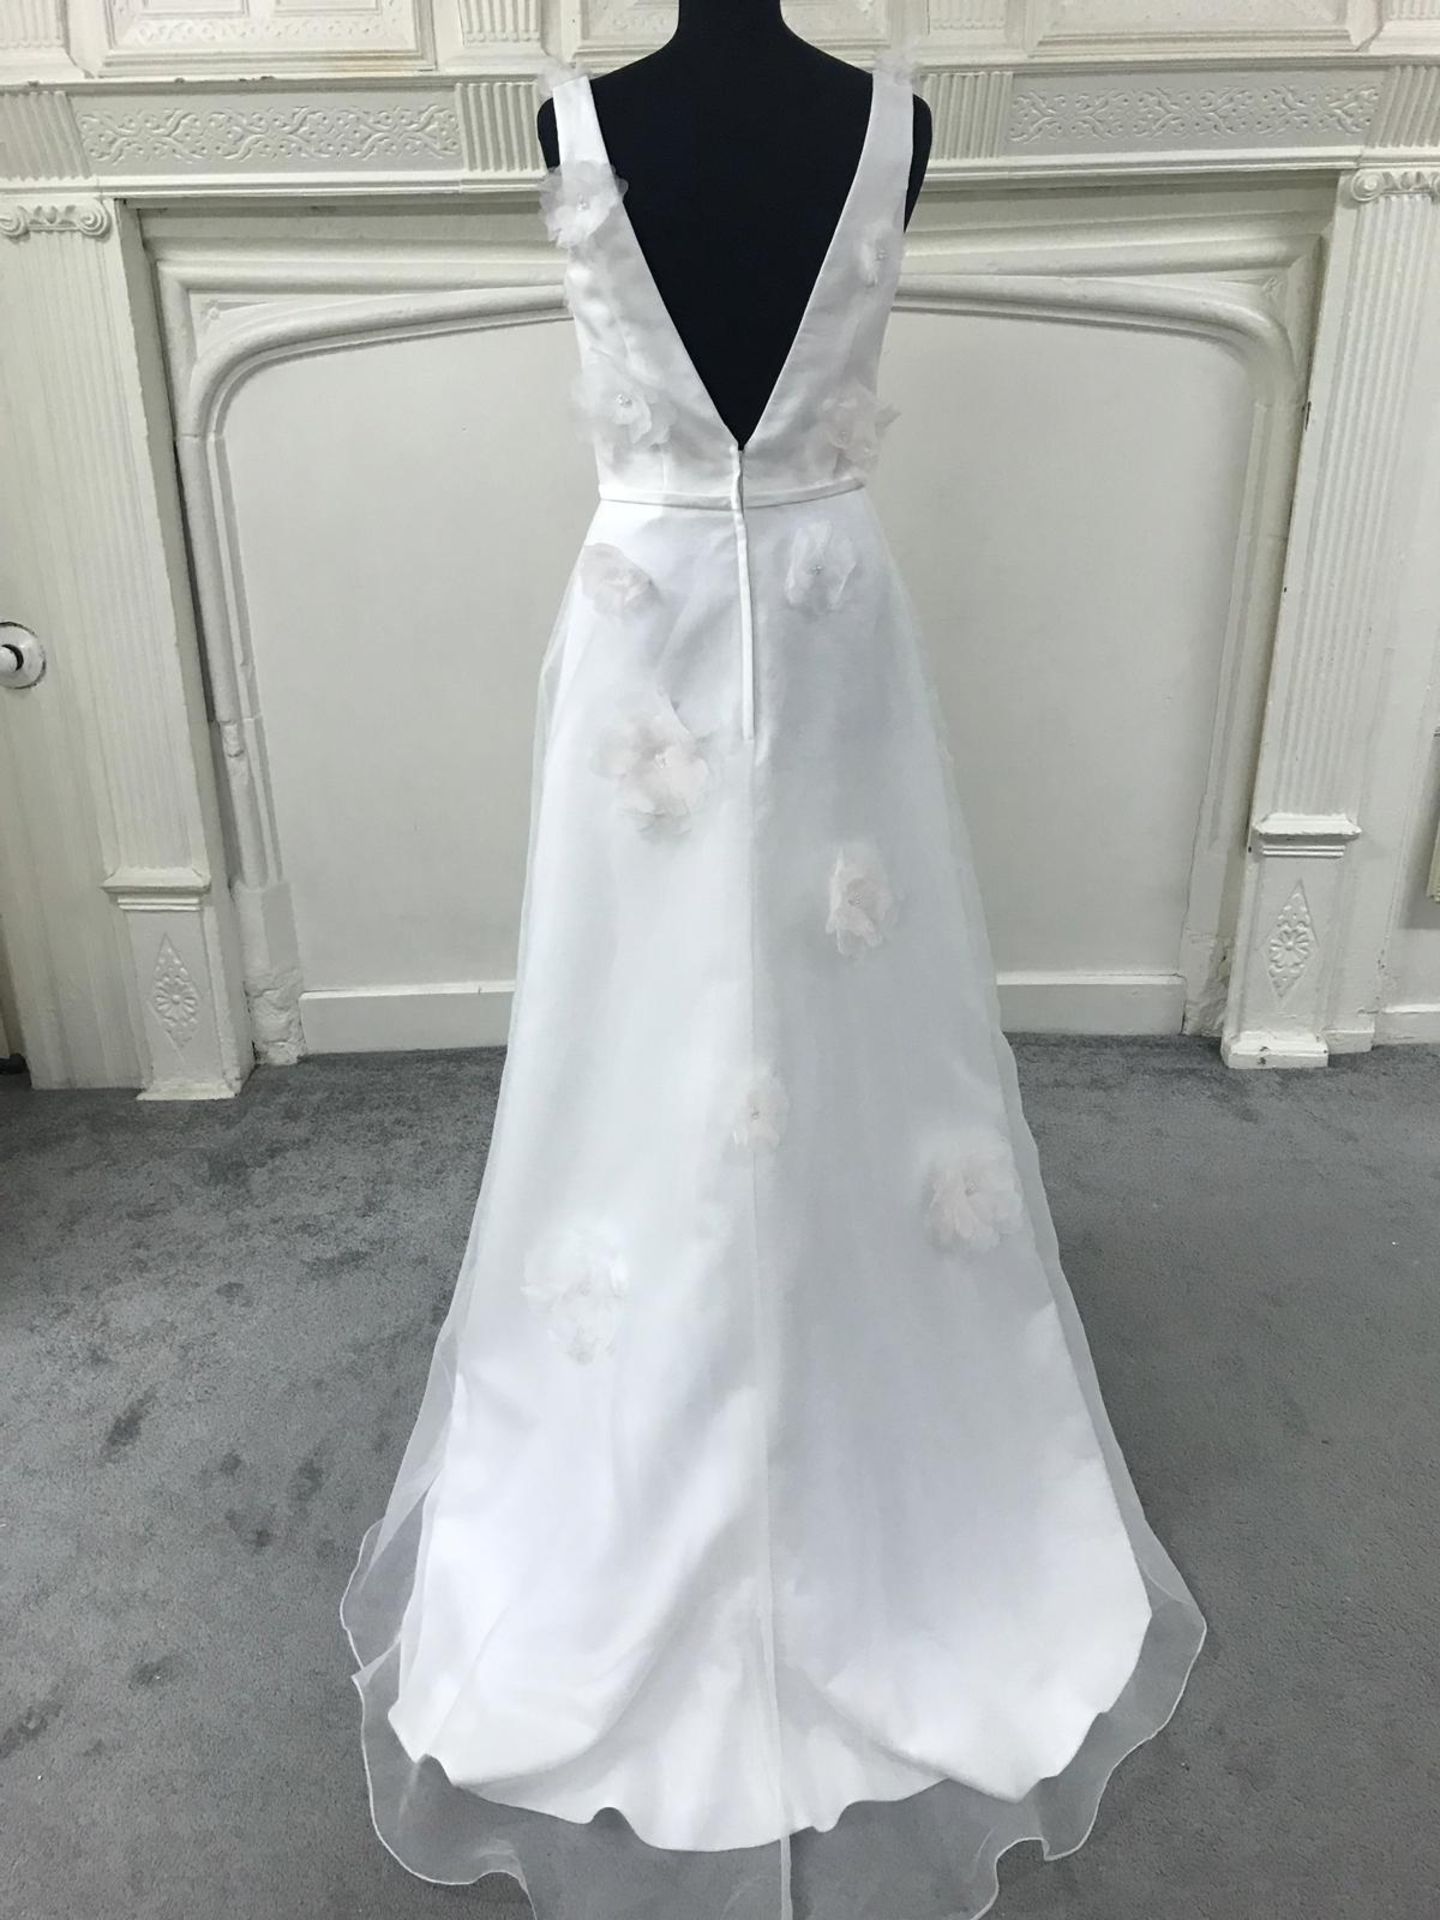 Alexia Wedding Dress Size 8 Ivory and Blush